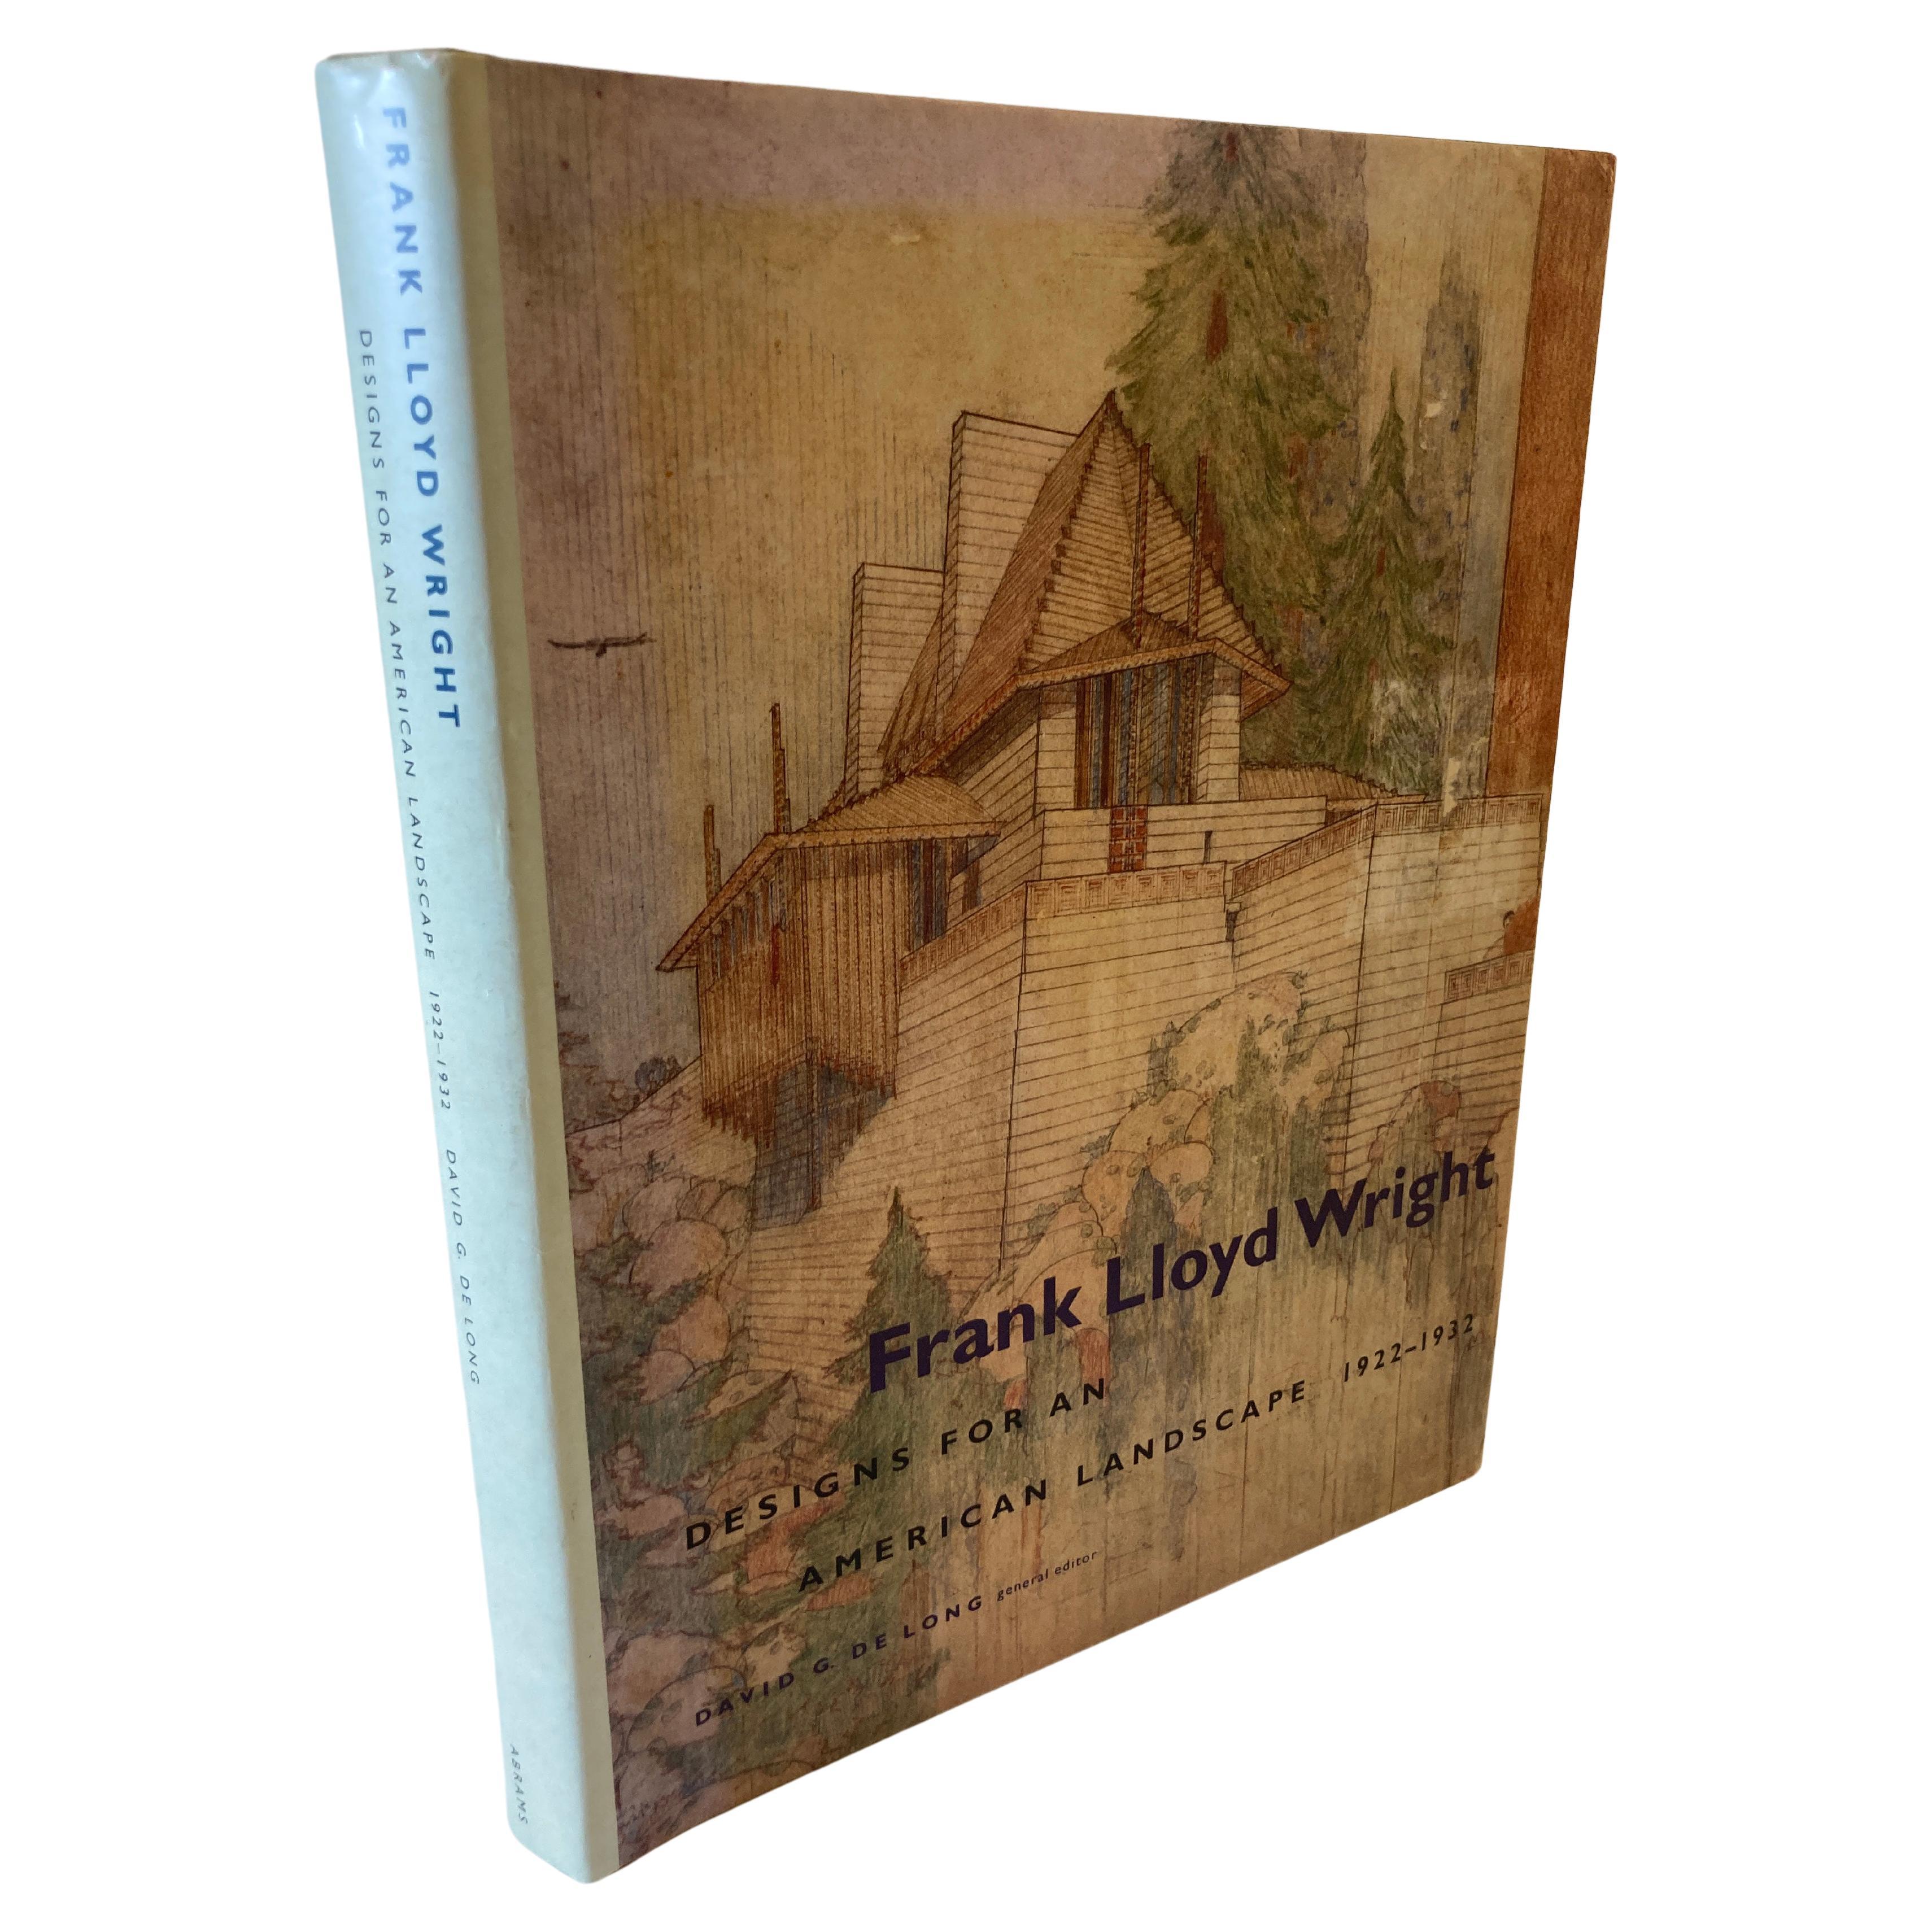 Livre de Frank Lloyd Wright : Designs for an American Landscape, 1922-1932